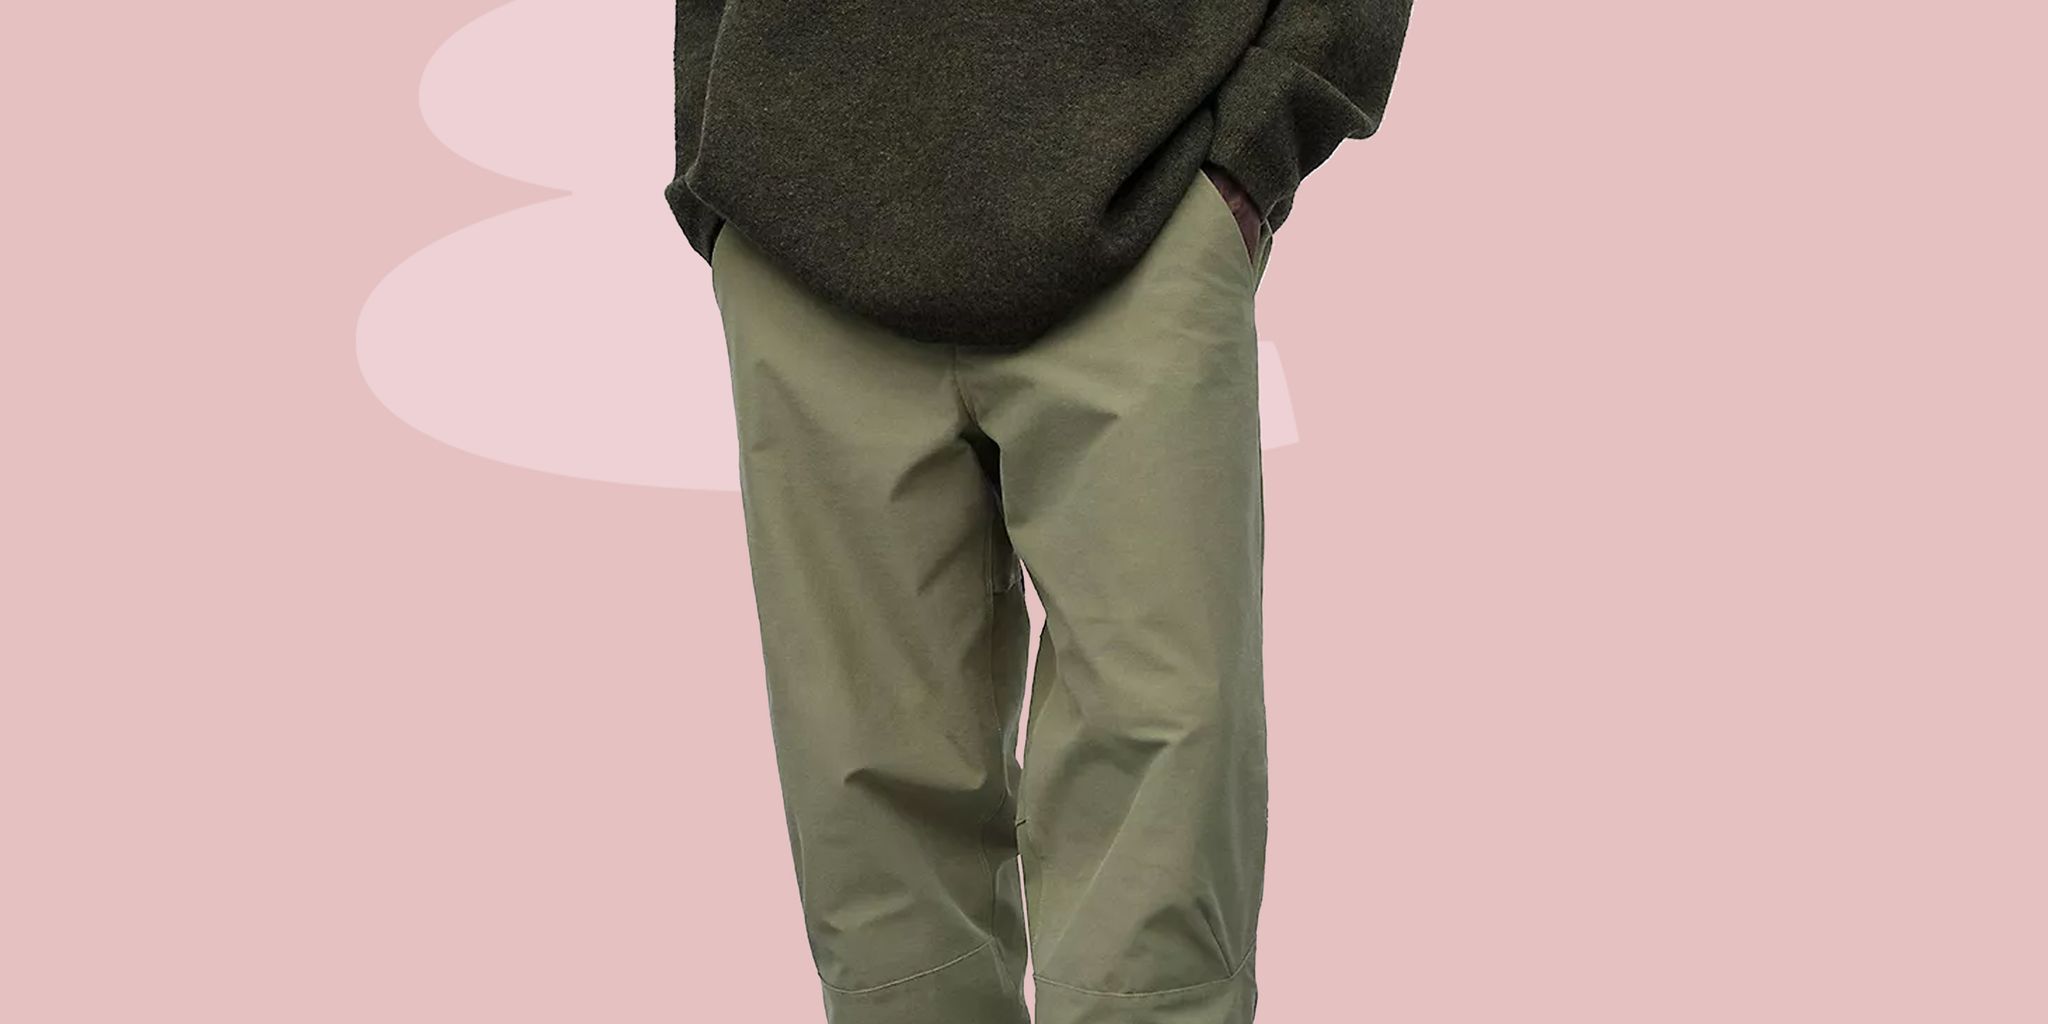 man with weird pants｜TikTok Search